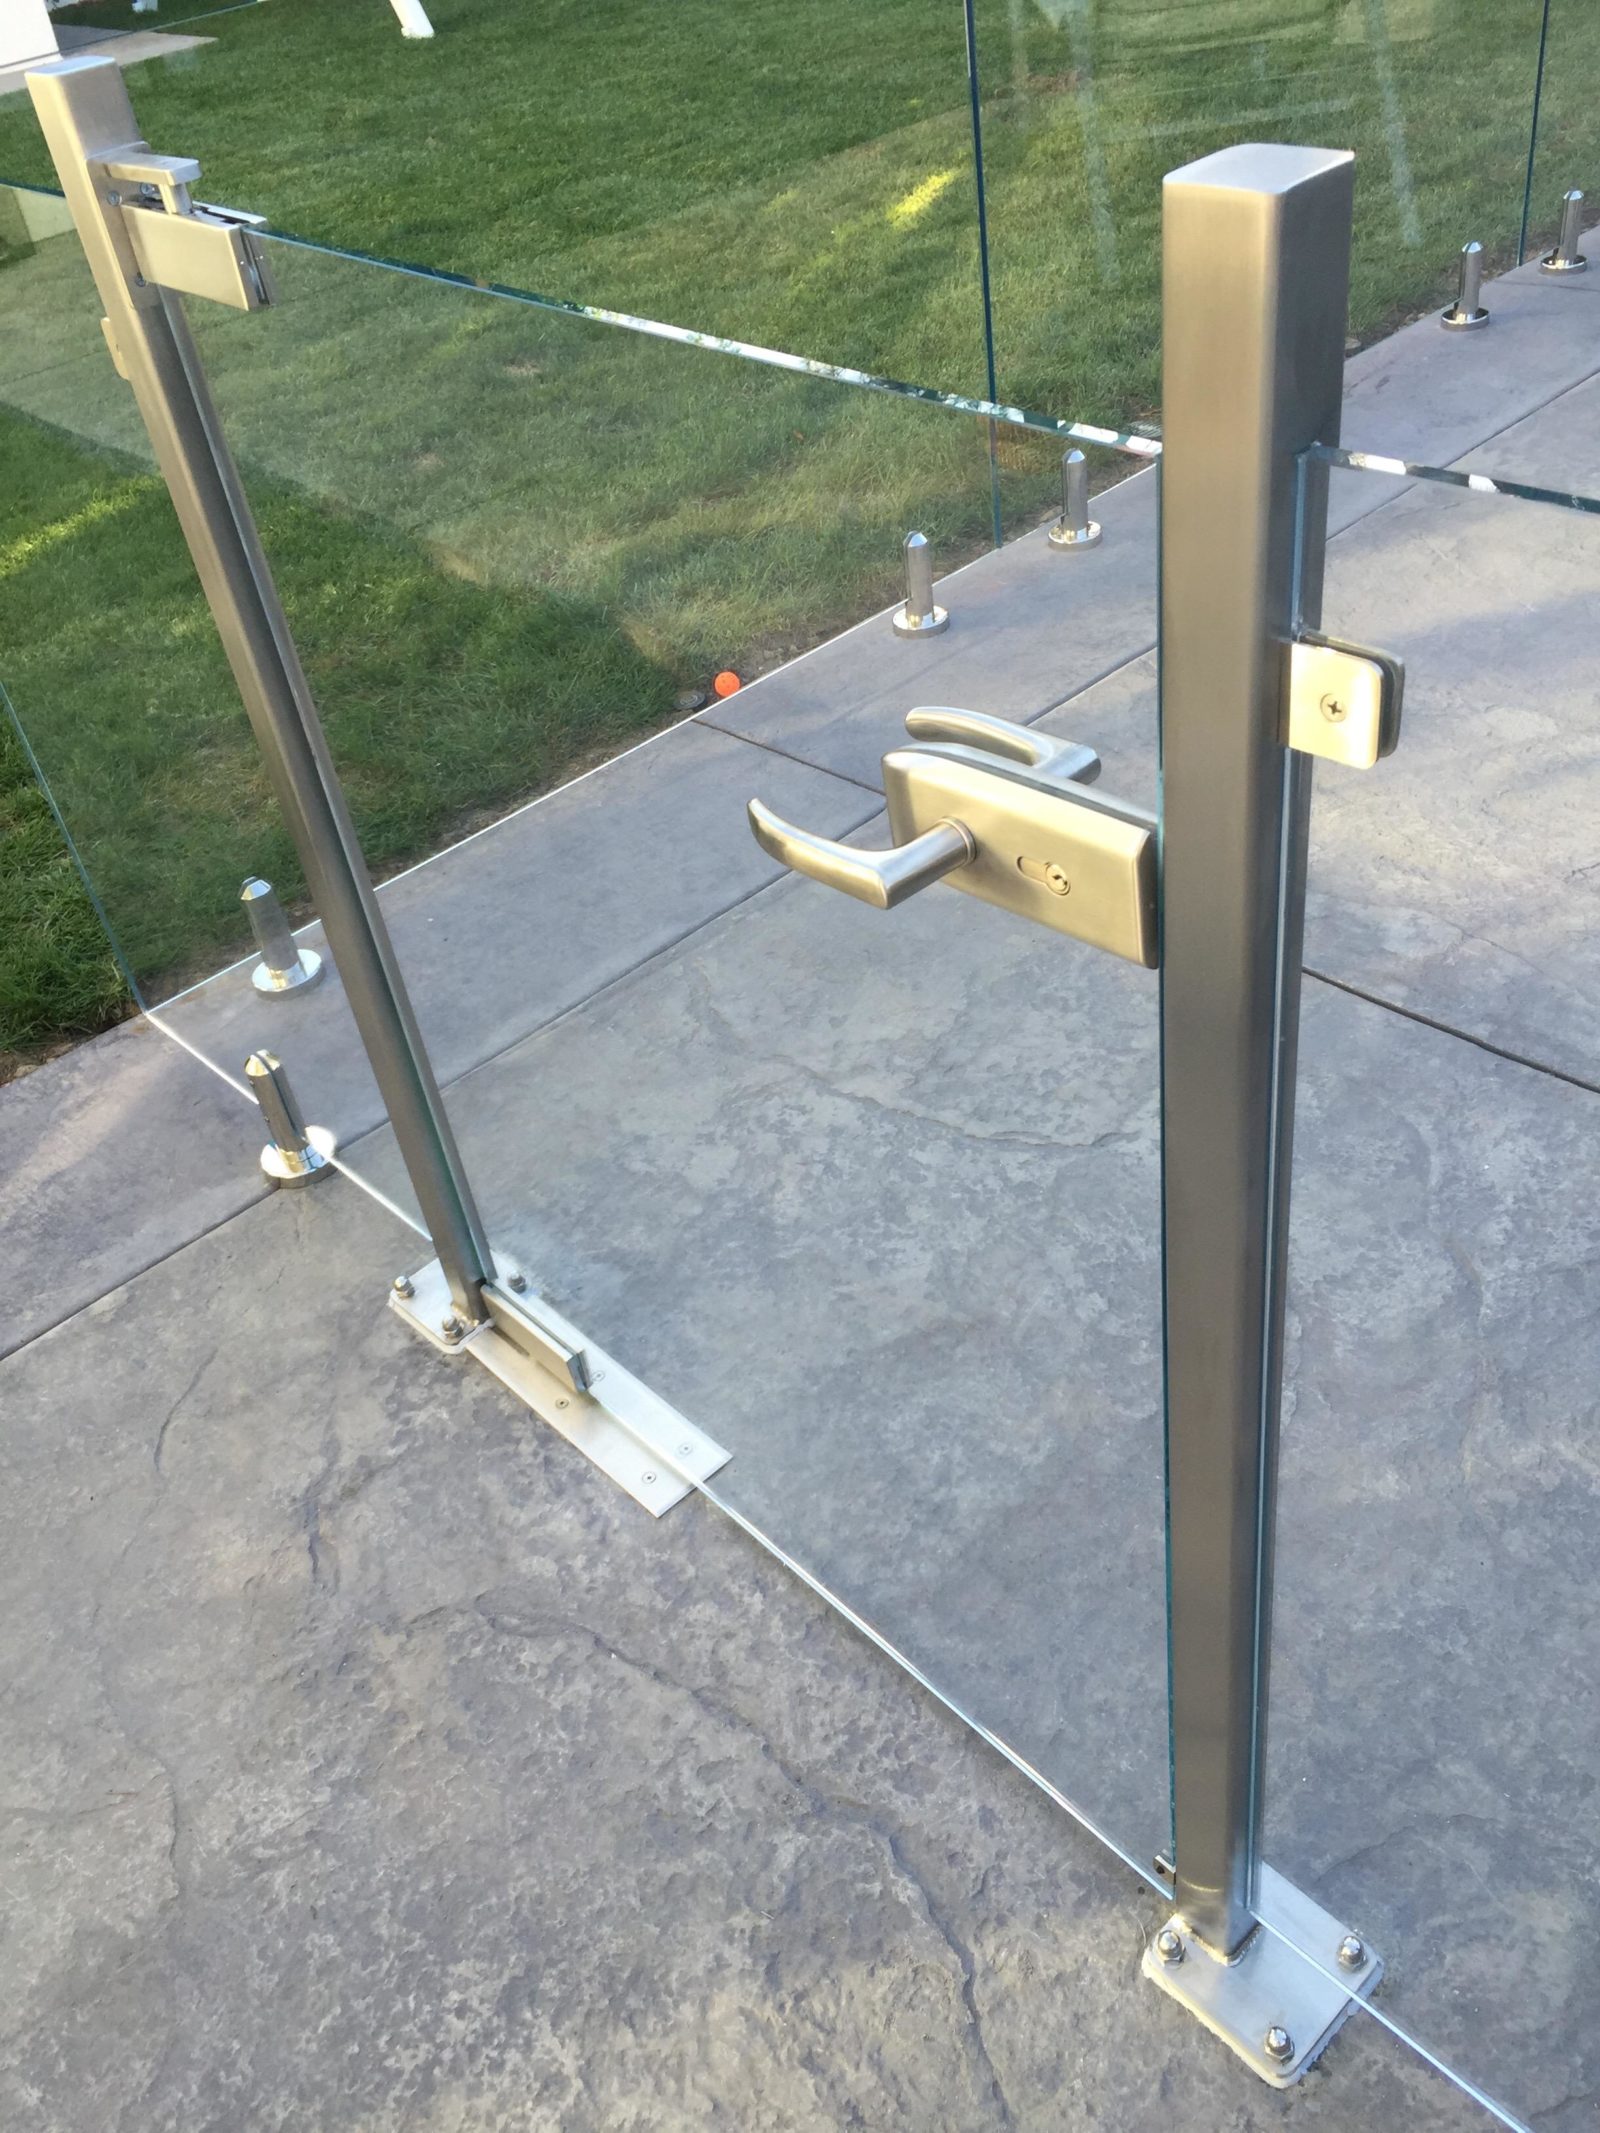 Semi Frameless Glass Pool Fences